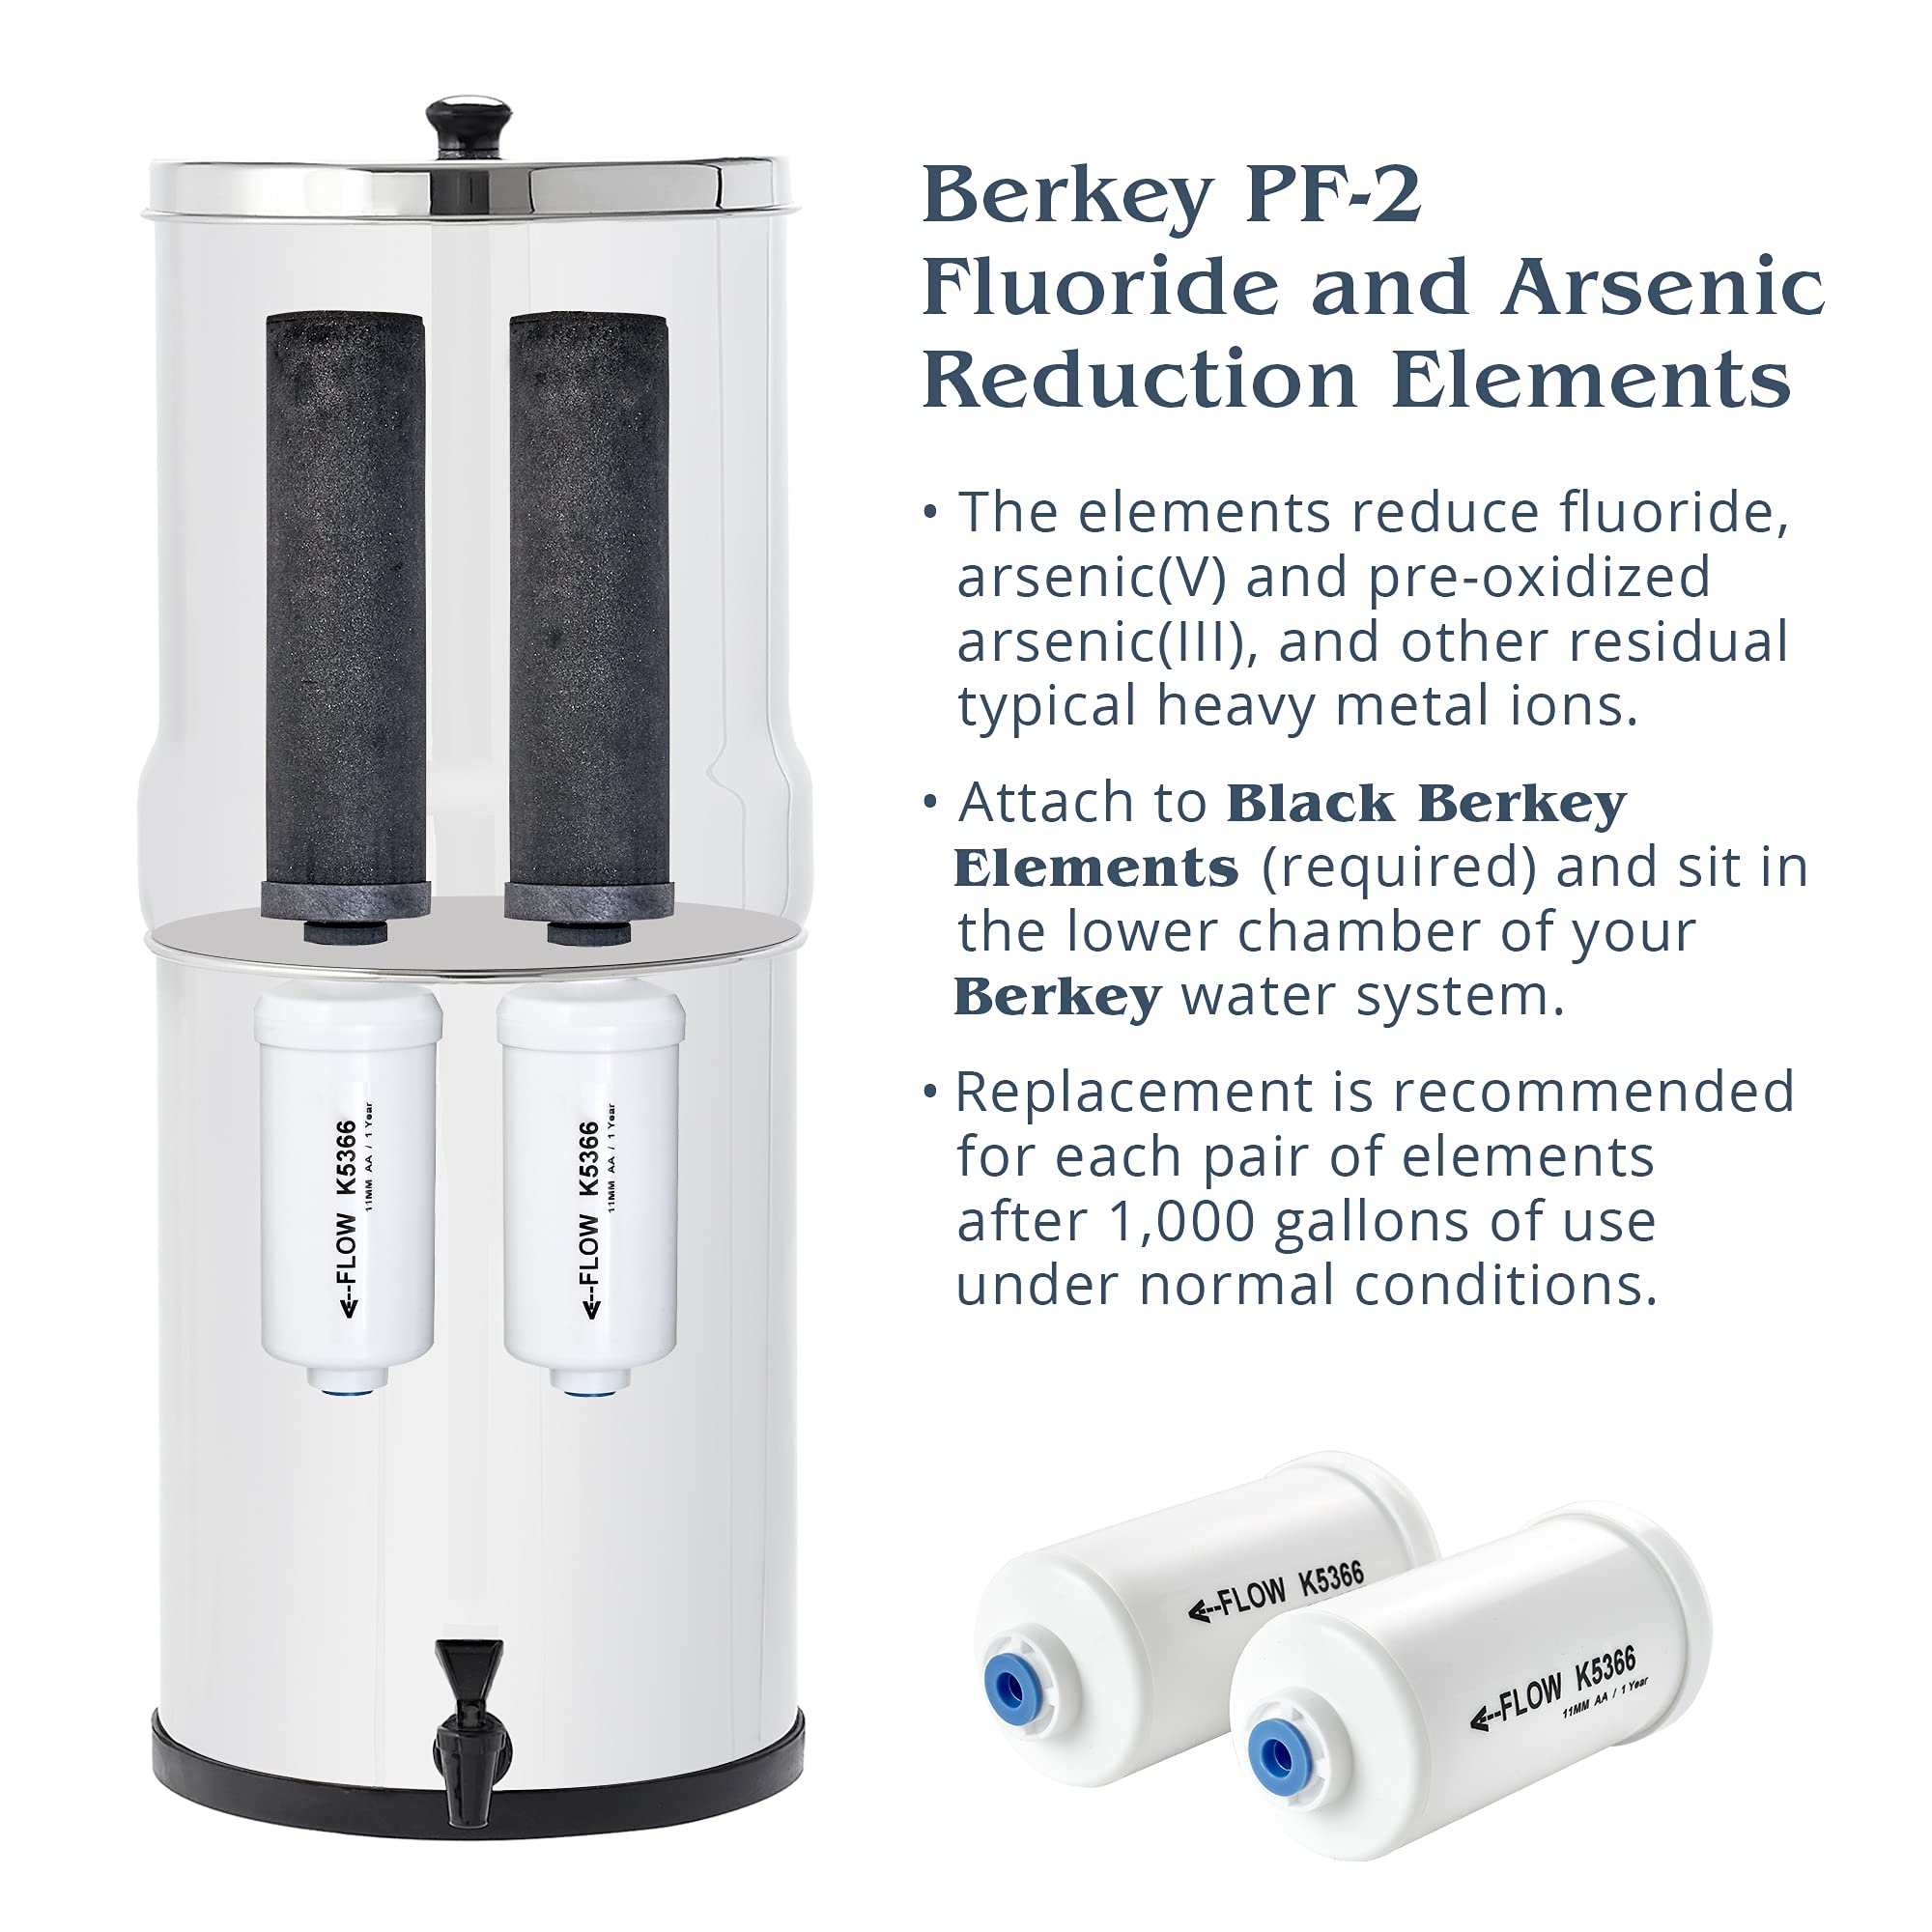 Berkey Authentic Berkey PF-2 Fluoride and Arsenic Reduction Elements (Set of 4 Elements